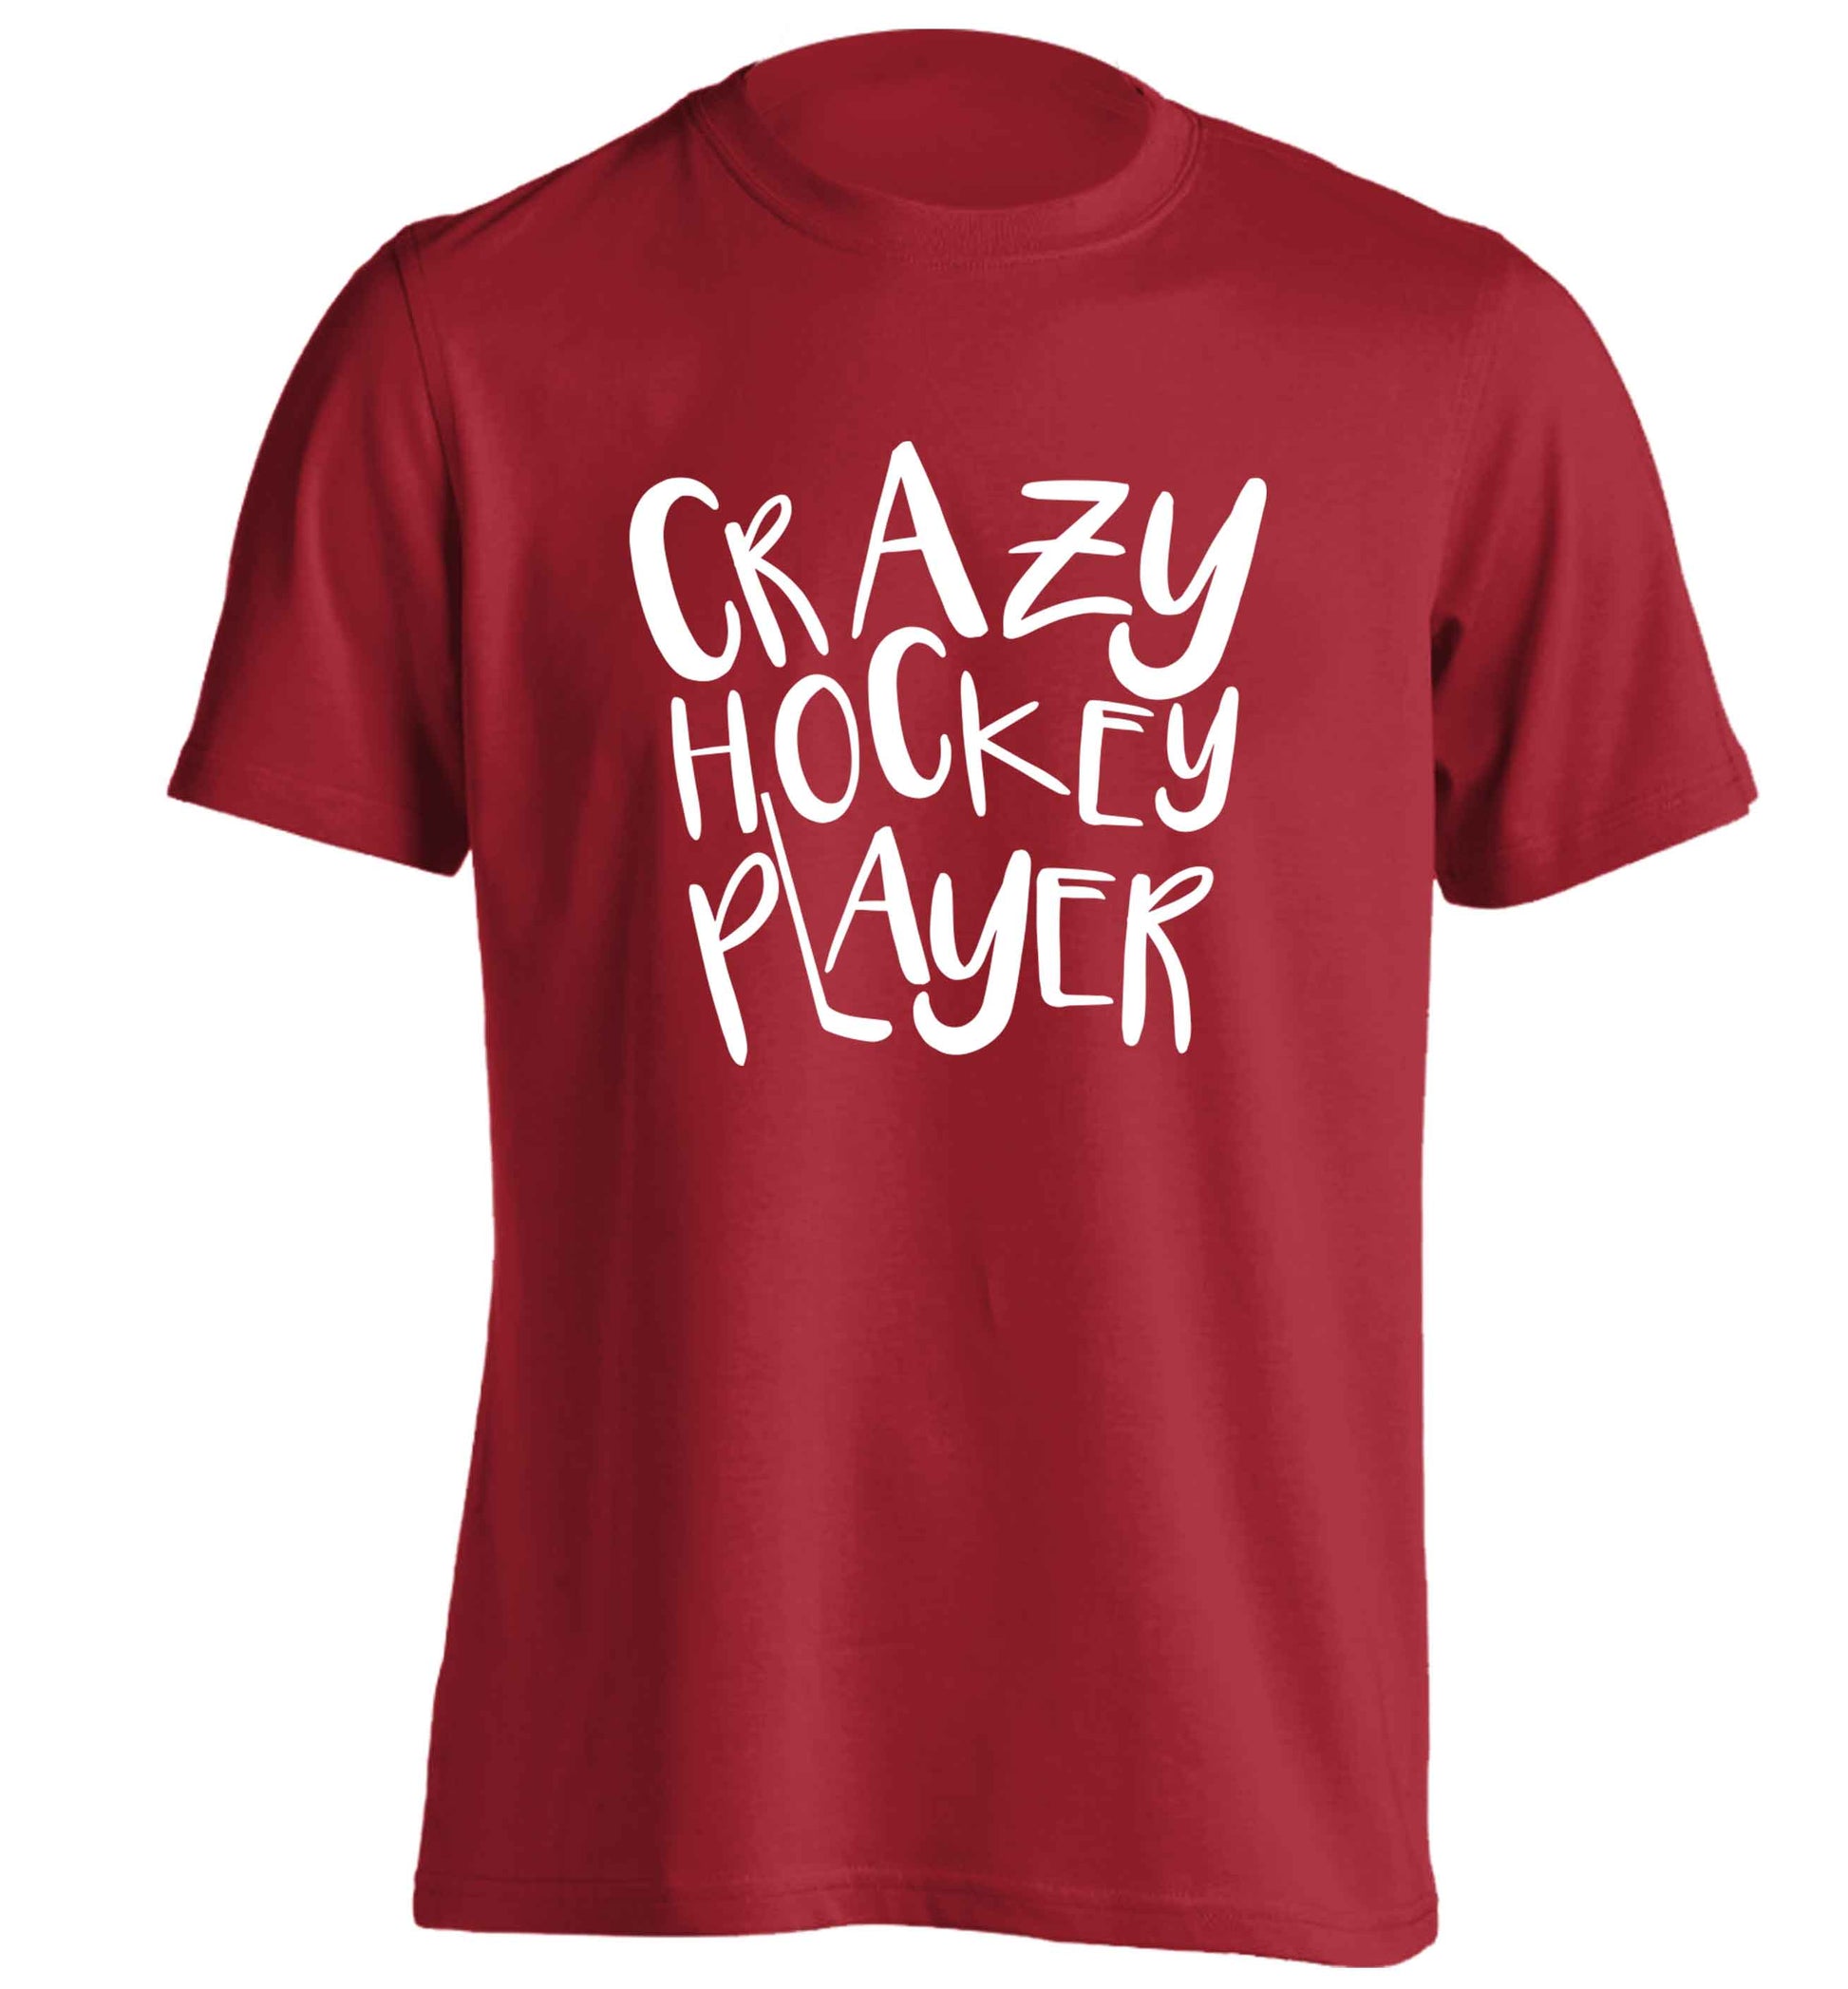 Crazy hockey player adults unisex red Tshirt 2XL